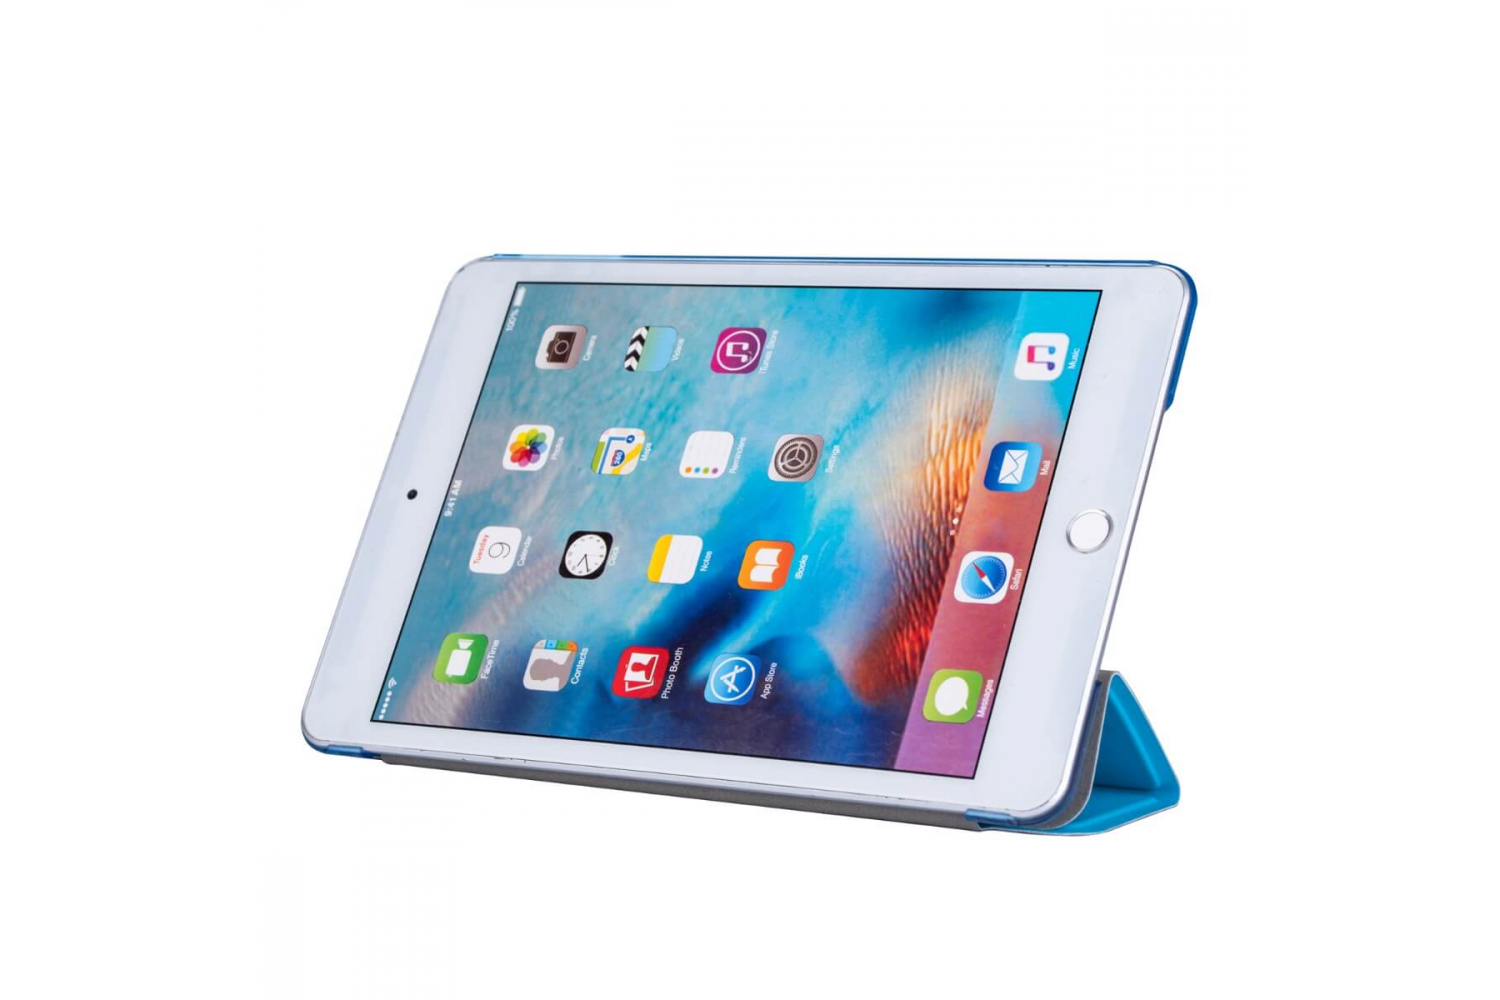 iPad Mini 4 Hard Tri-Fold Book Cover Blauw